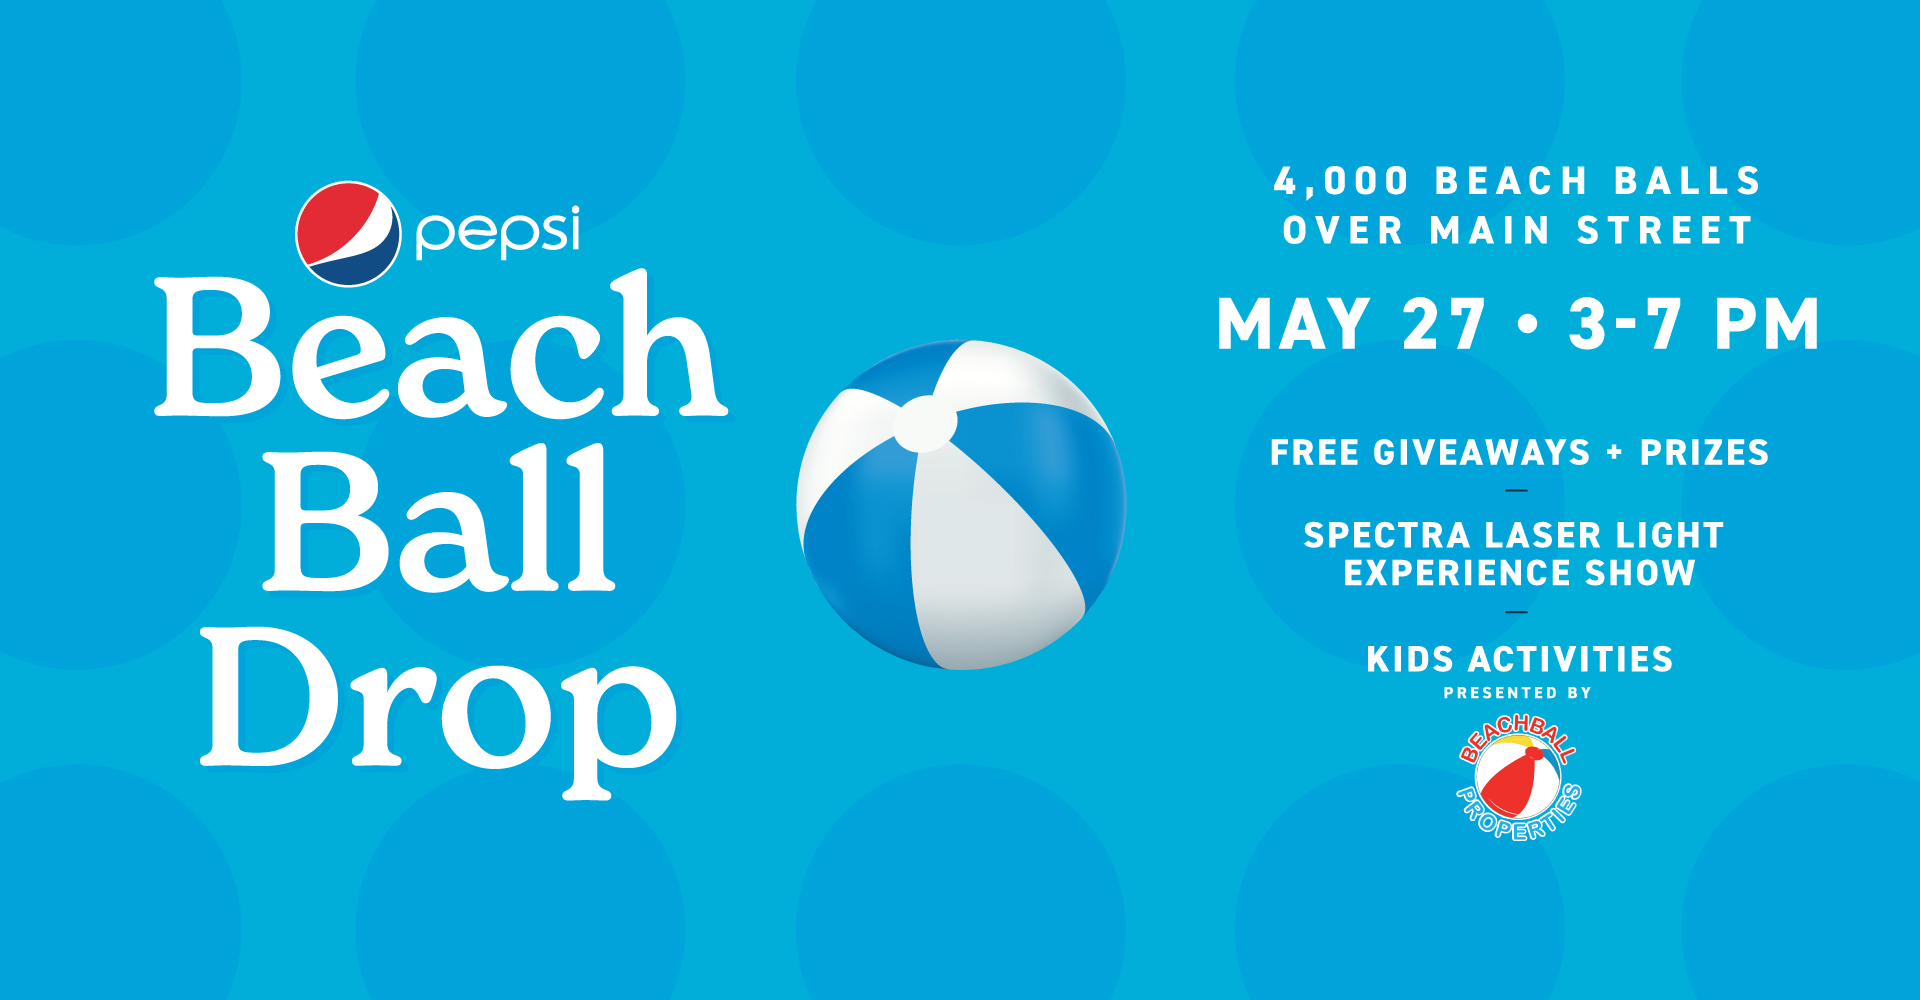 Pepsi Beach Ball Drop